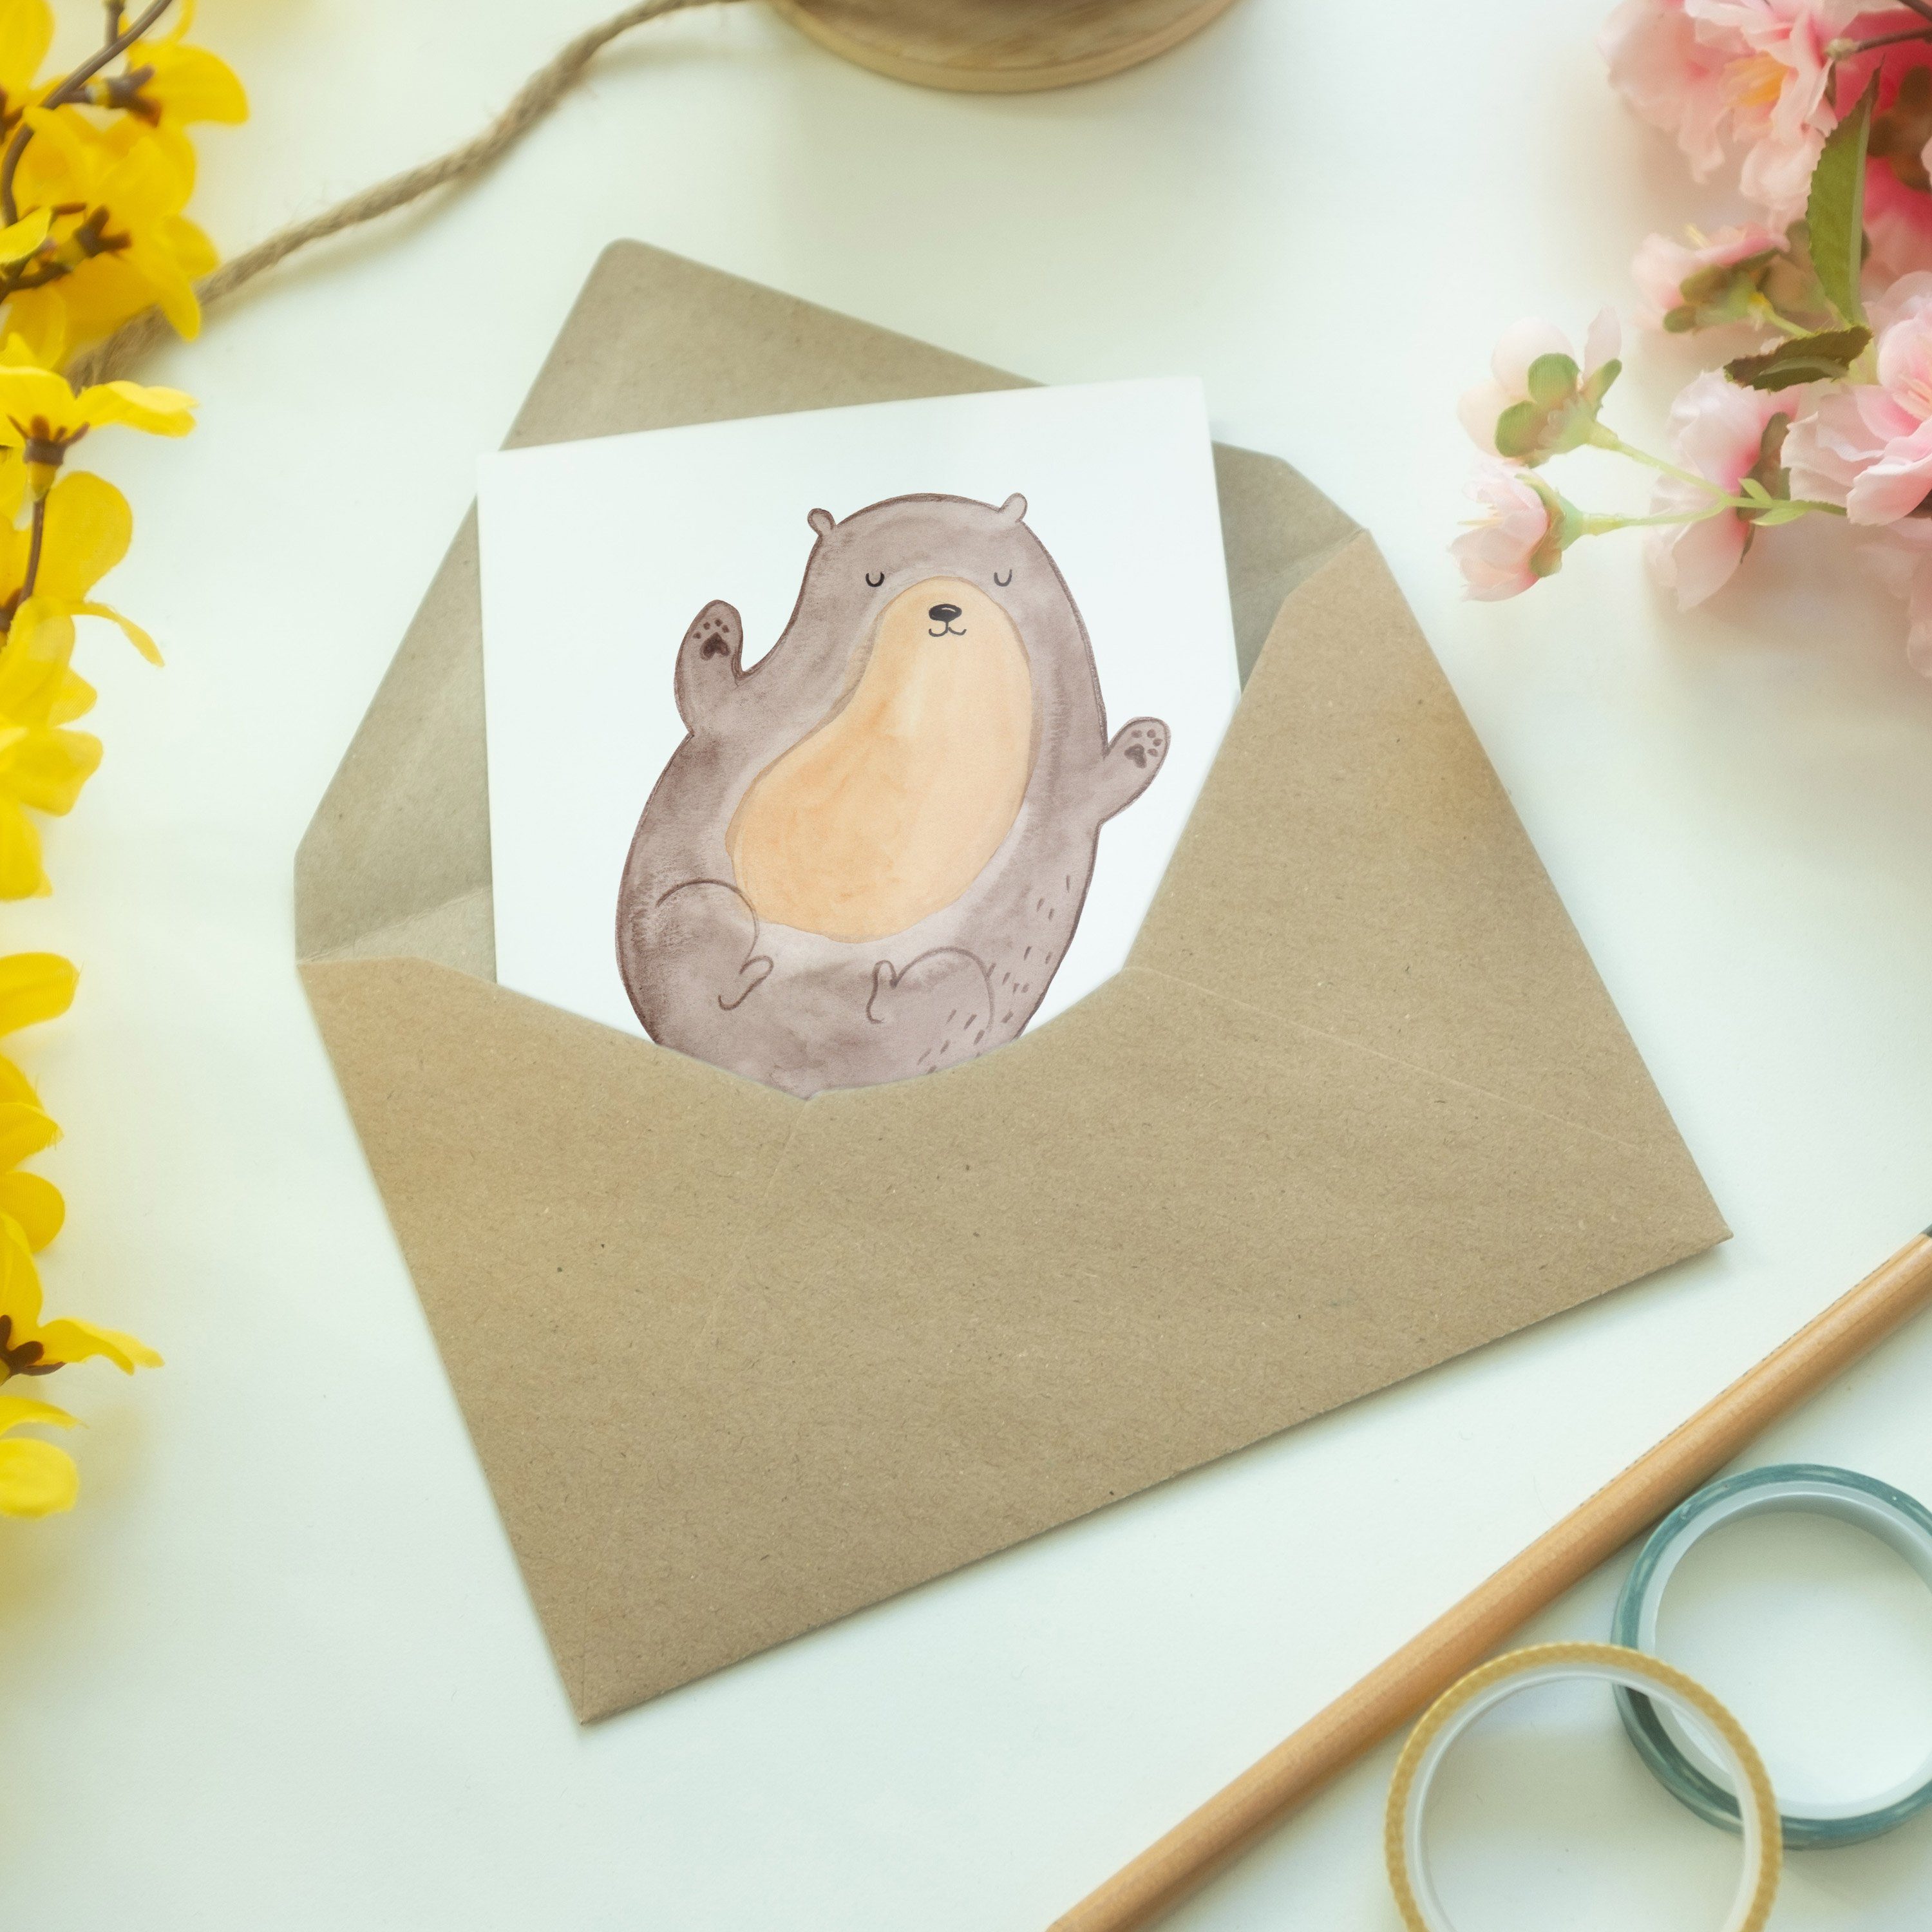 Mr. & Mrs. Panda Grußkarte Karte, - Geschenk, Weiß Otter - Seeotter, Geburtstagskarte Umarmen